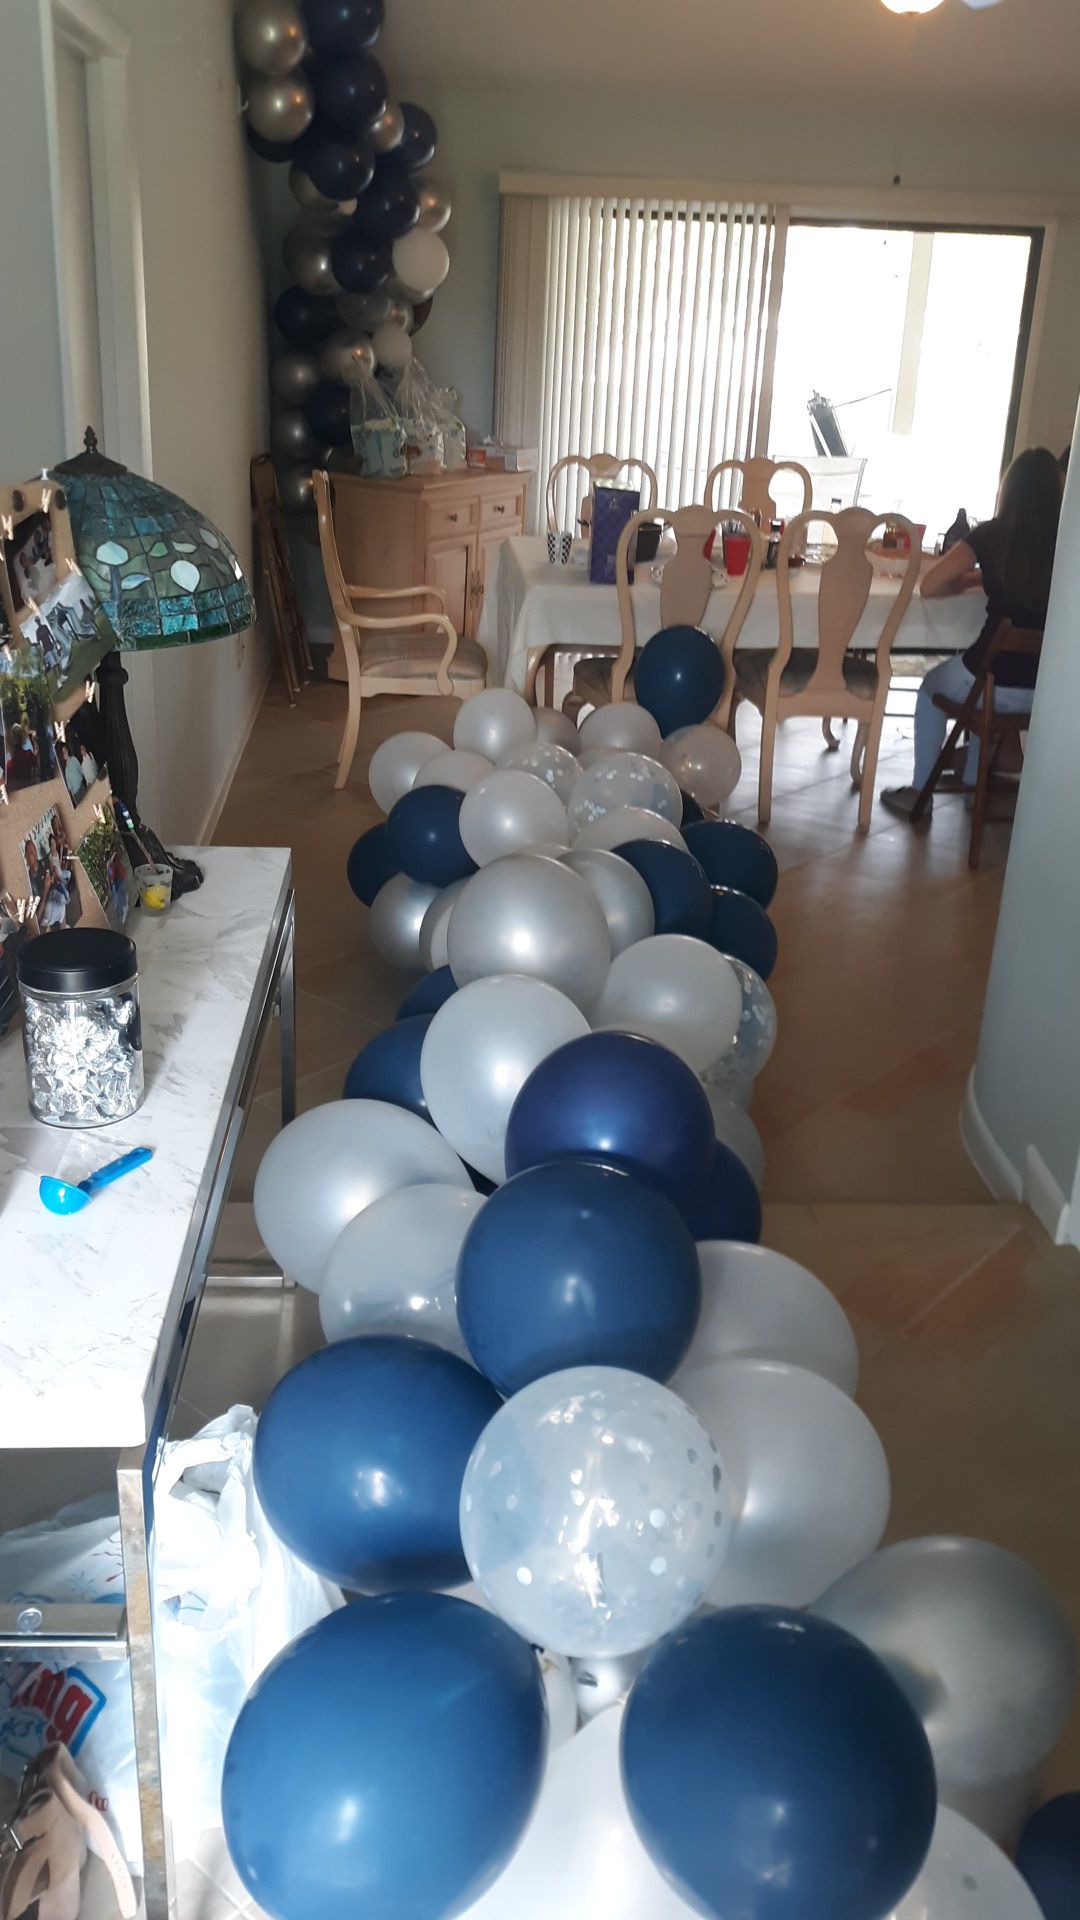 3 massive balloon arches ready to go